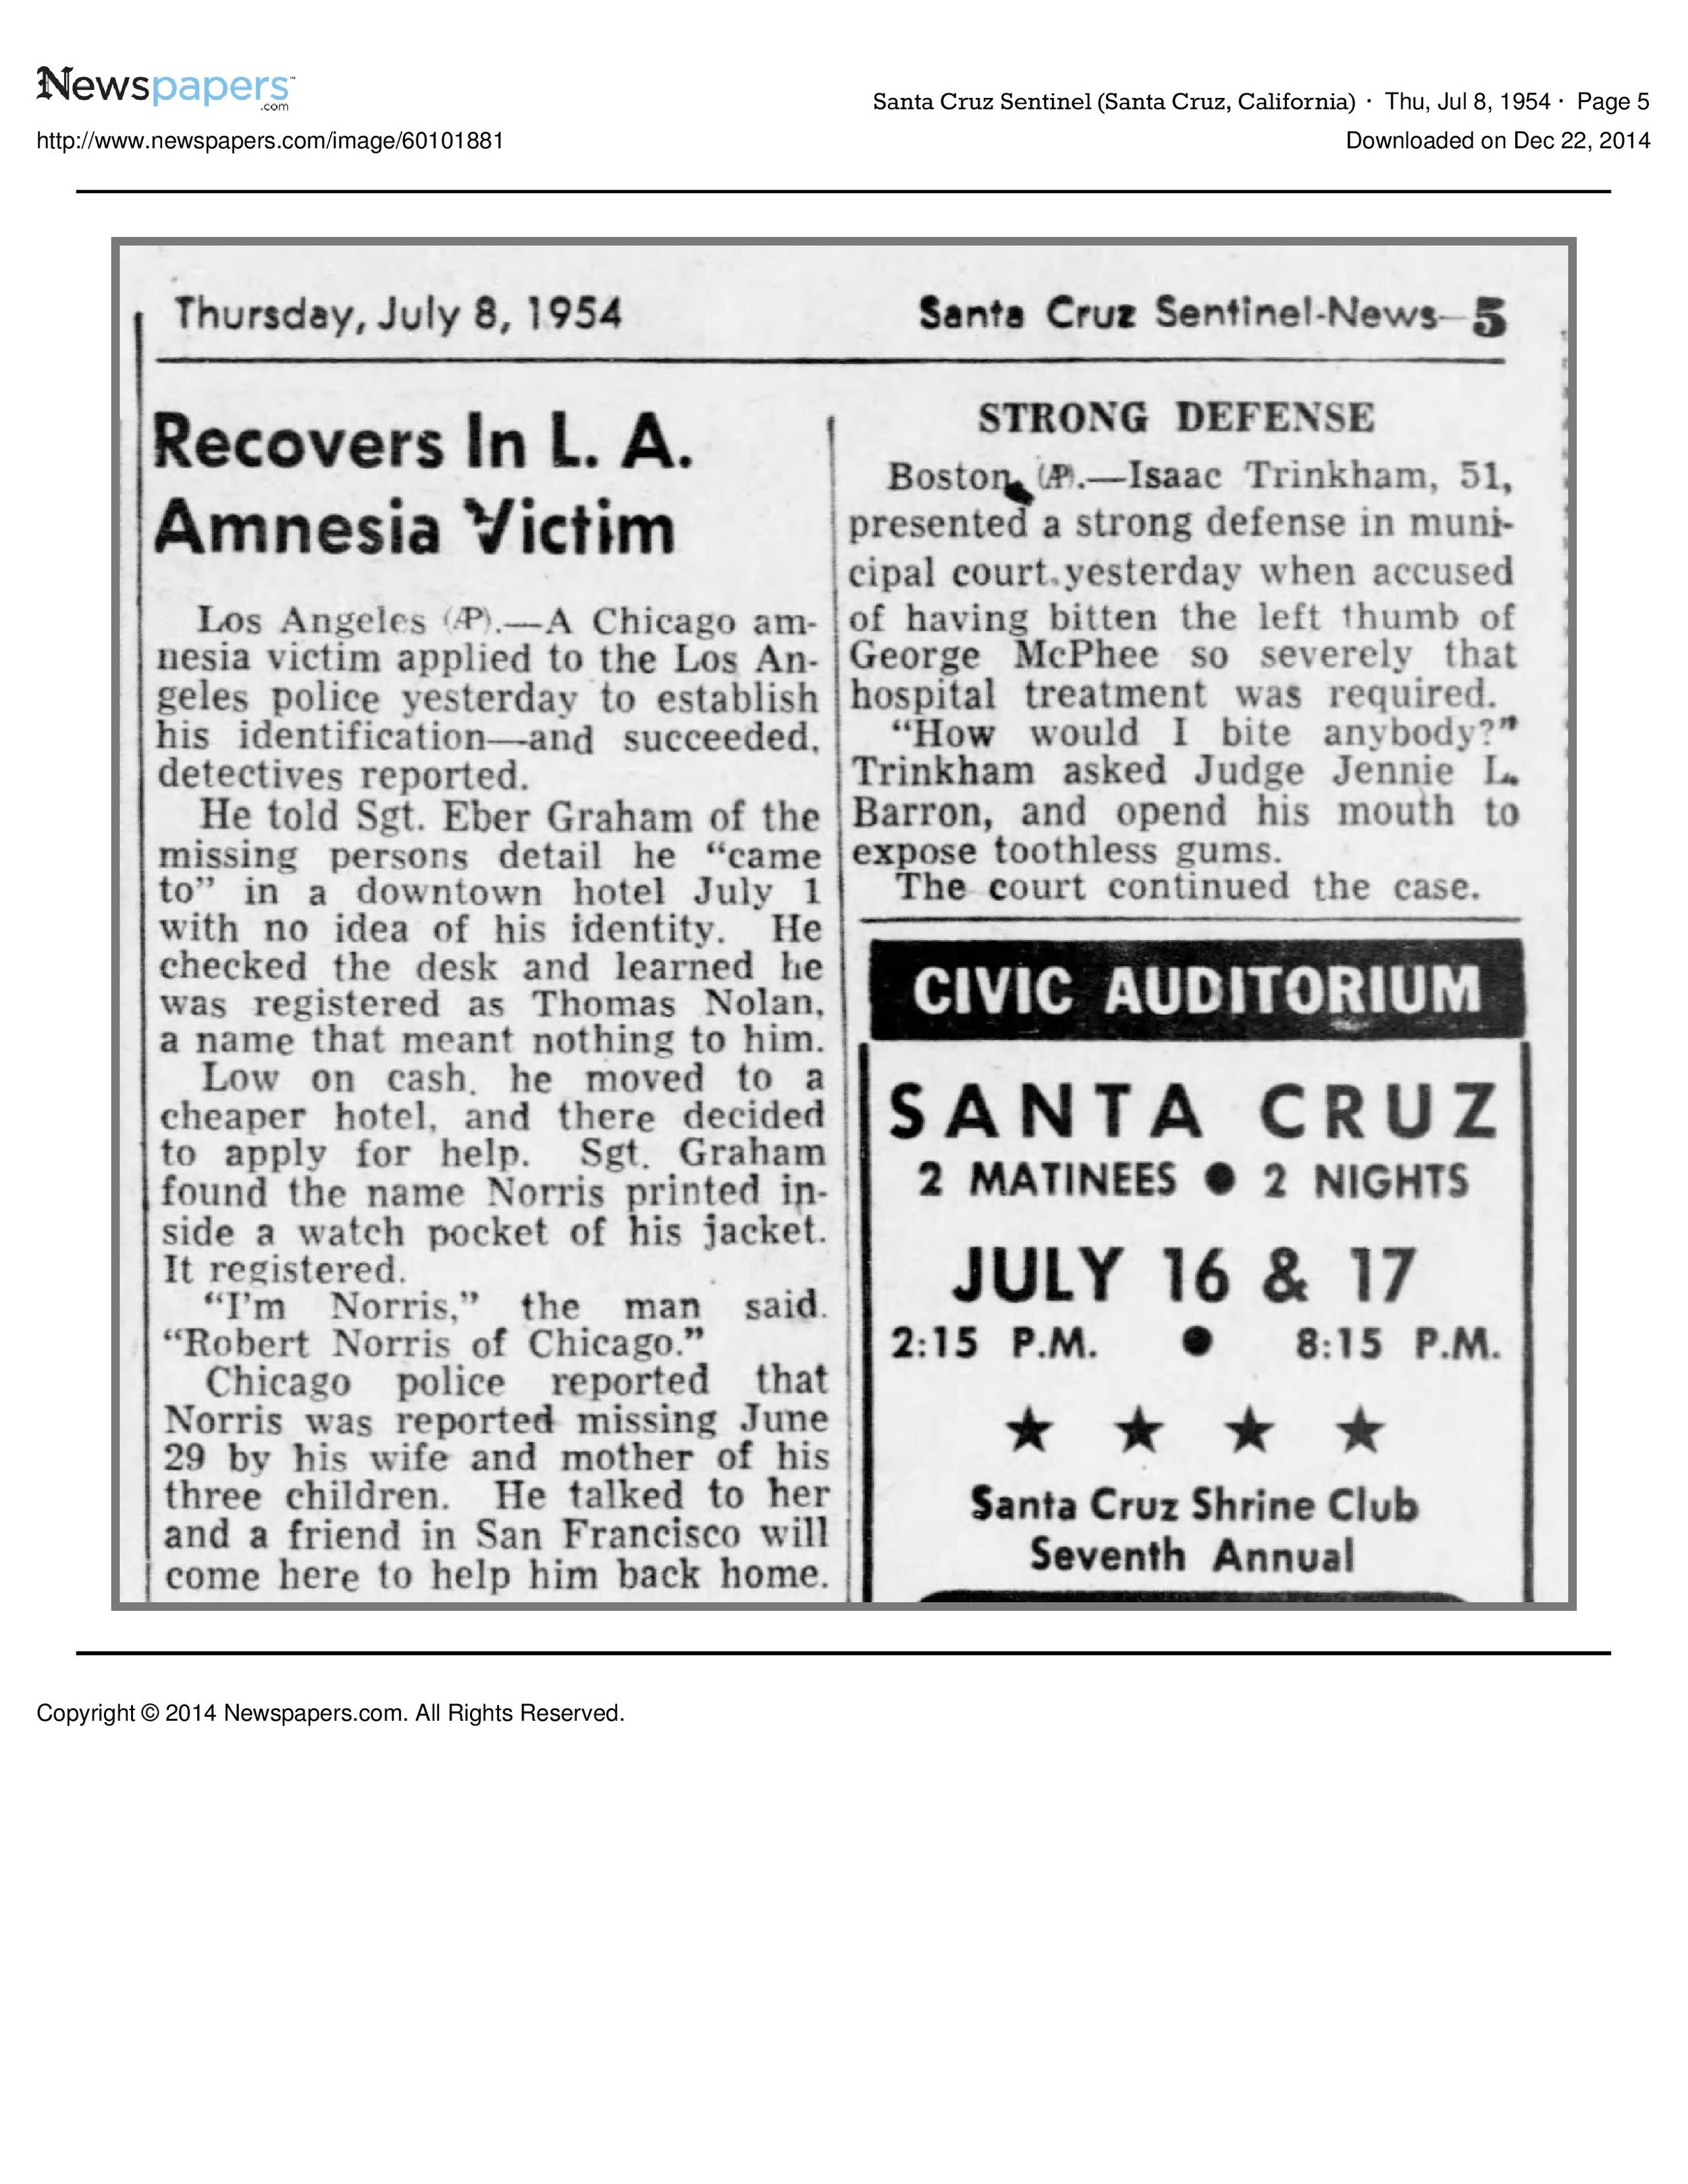 Santa_Cruz_Sentinel_Thu__Jul_8__1954_-page-001.jpg